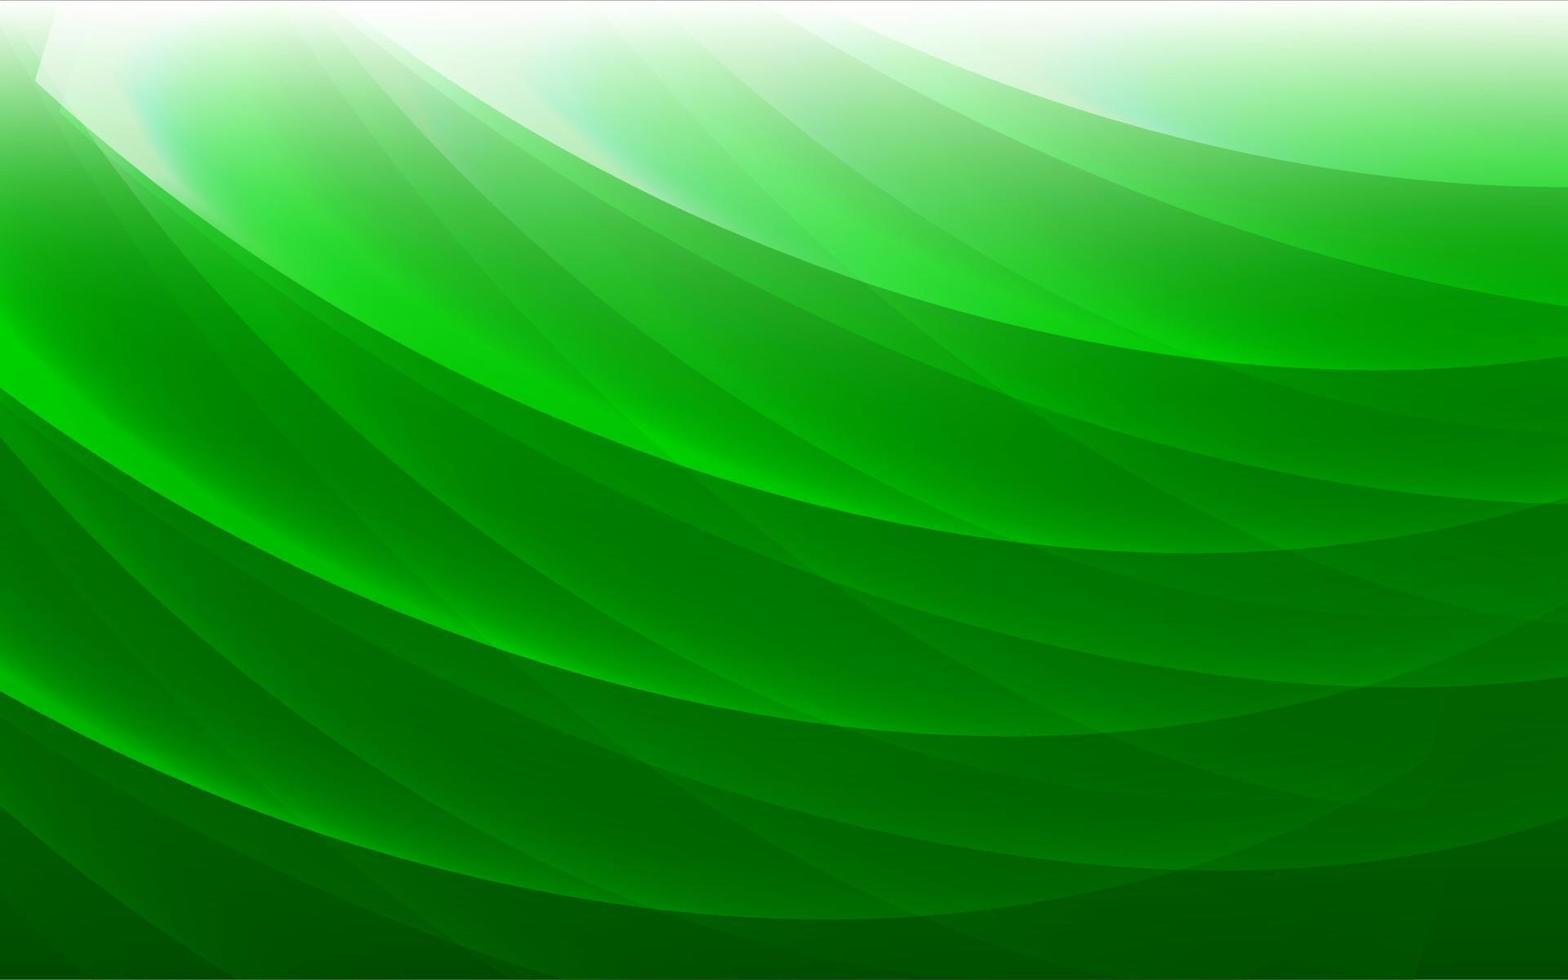 elegante abstrato verde com onda brilhante. vetor abstrato de fundo verde gradiente com formas brilhantes.